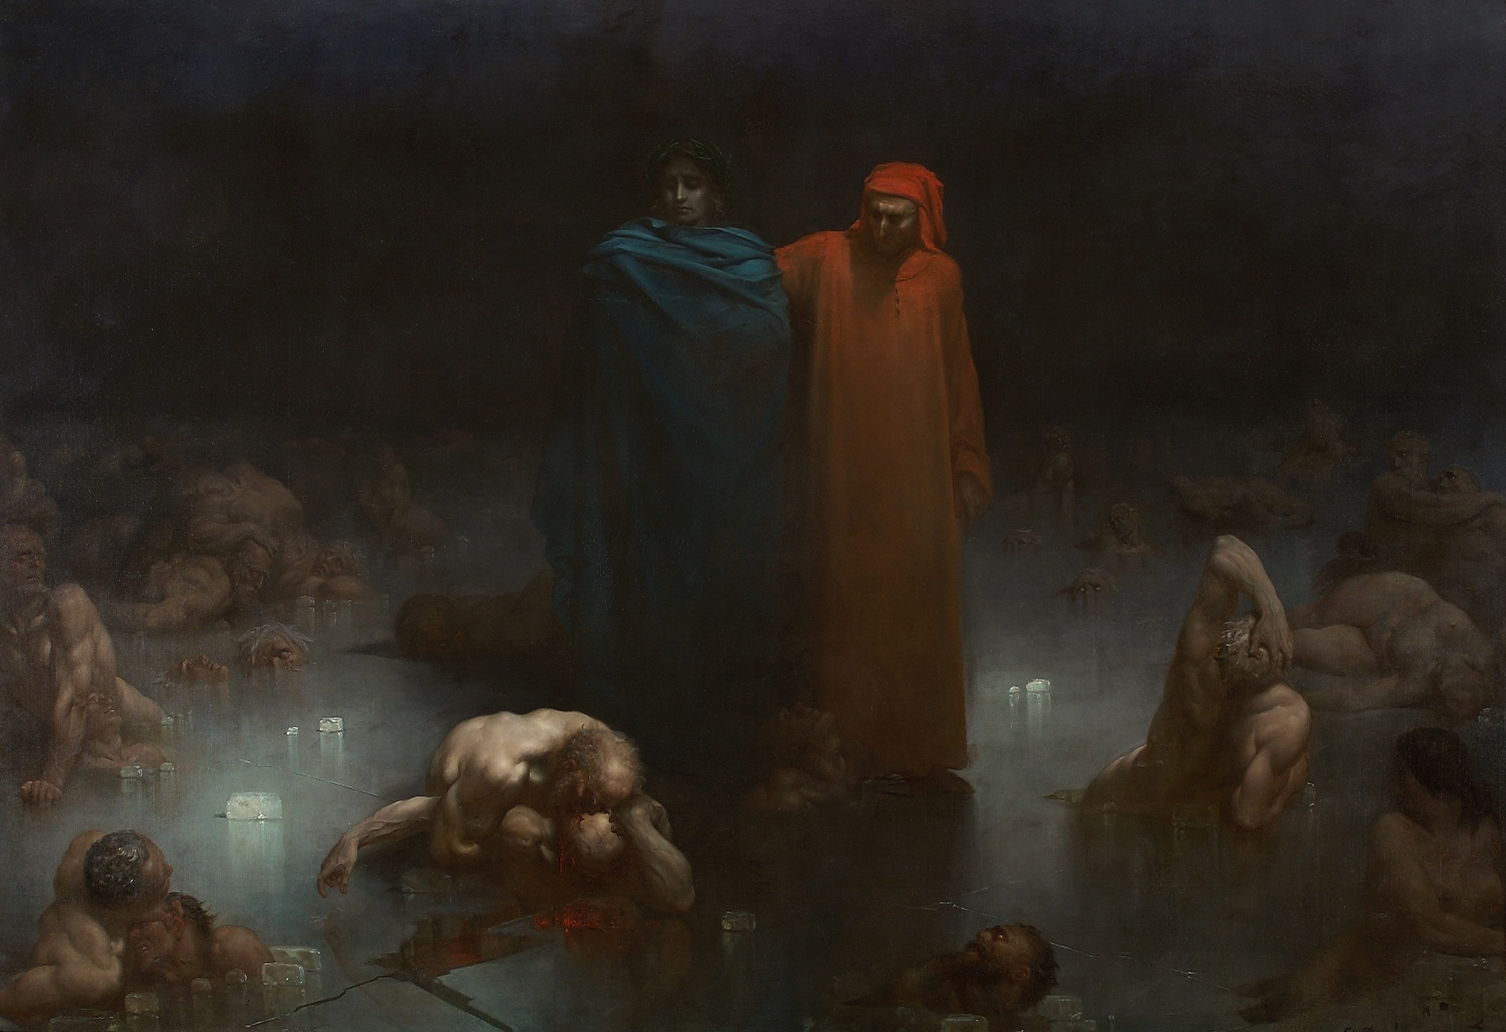 PDF) Gustave Doré's Illustrations for Dante's Divine Comedy